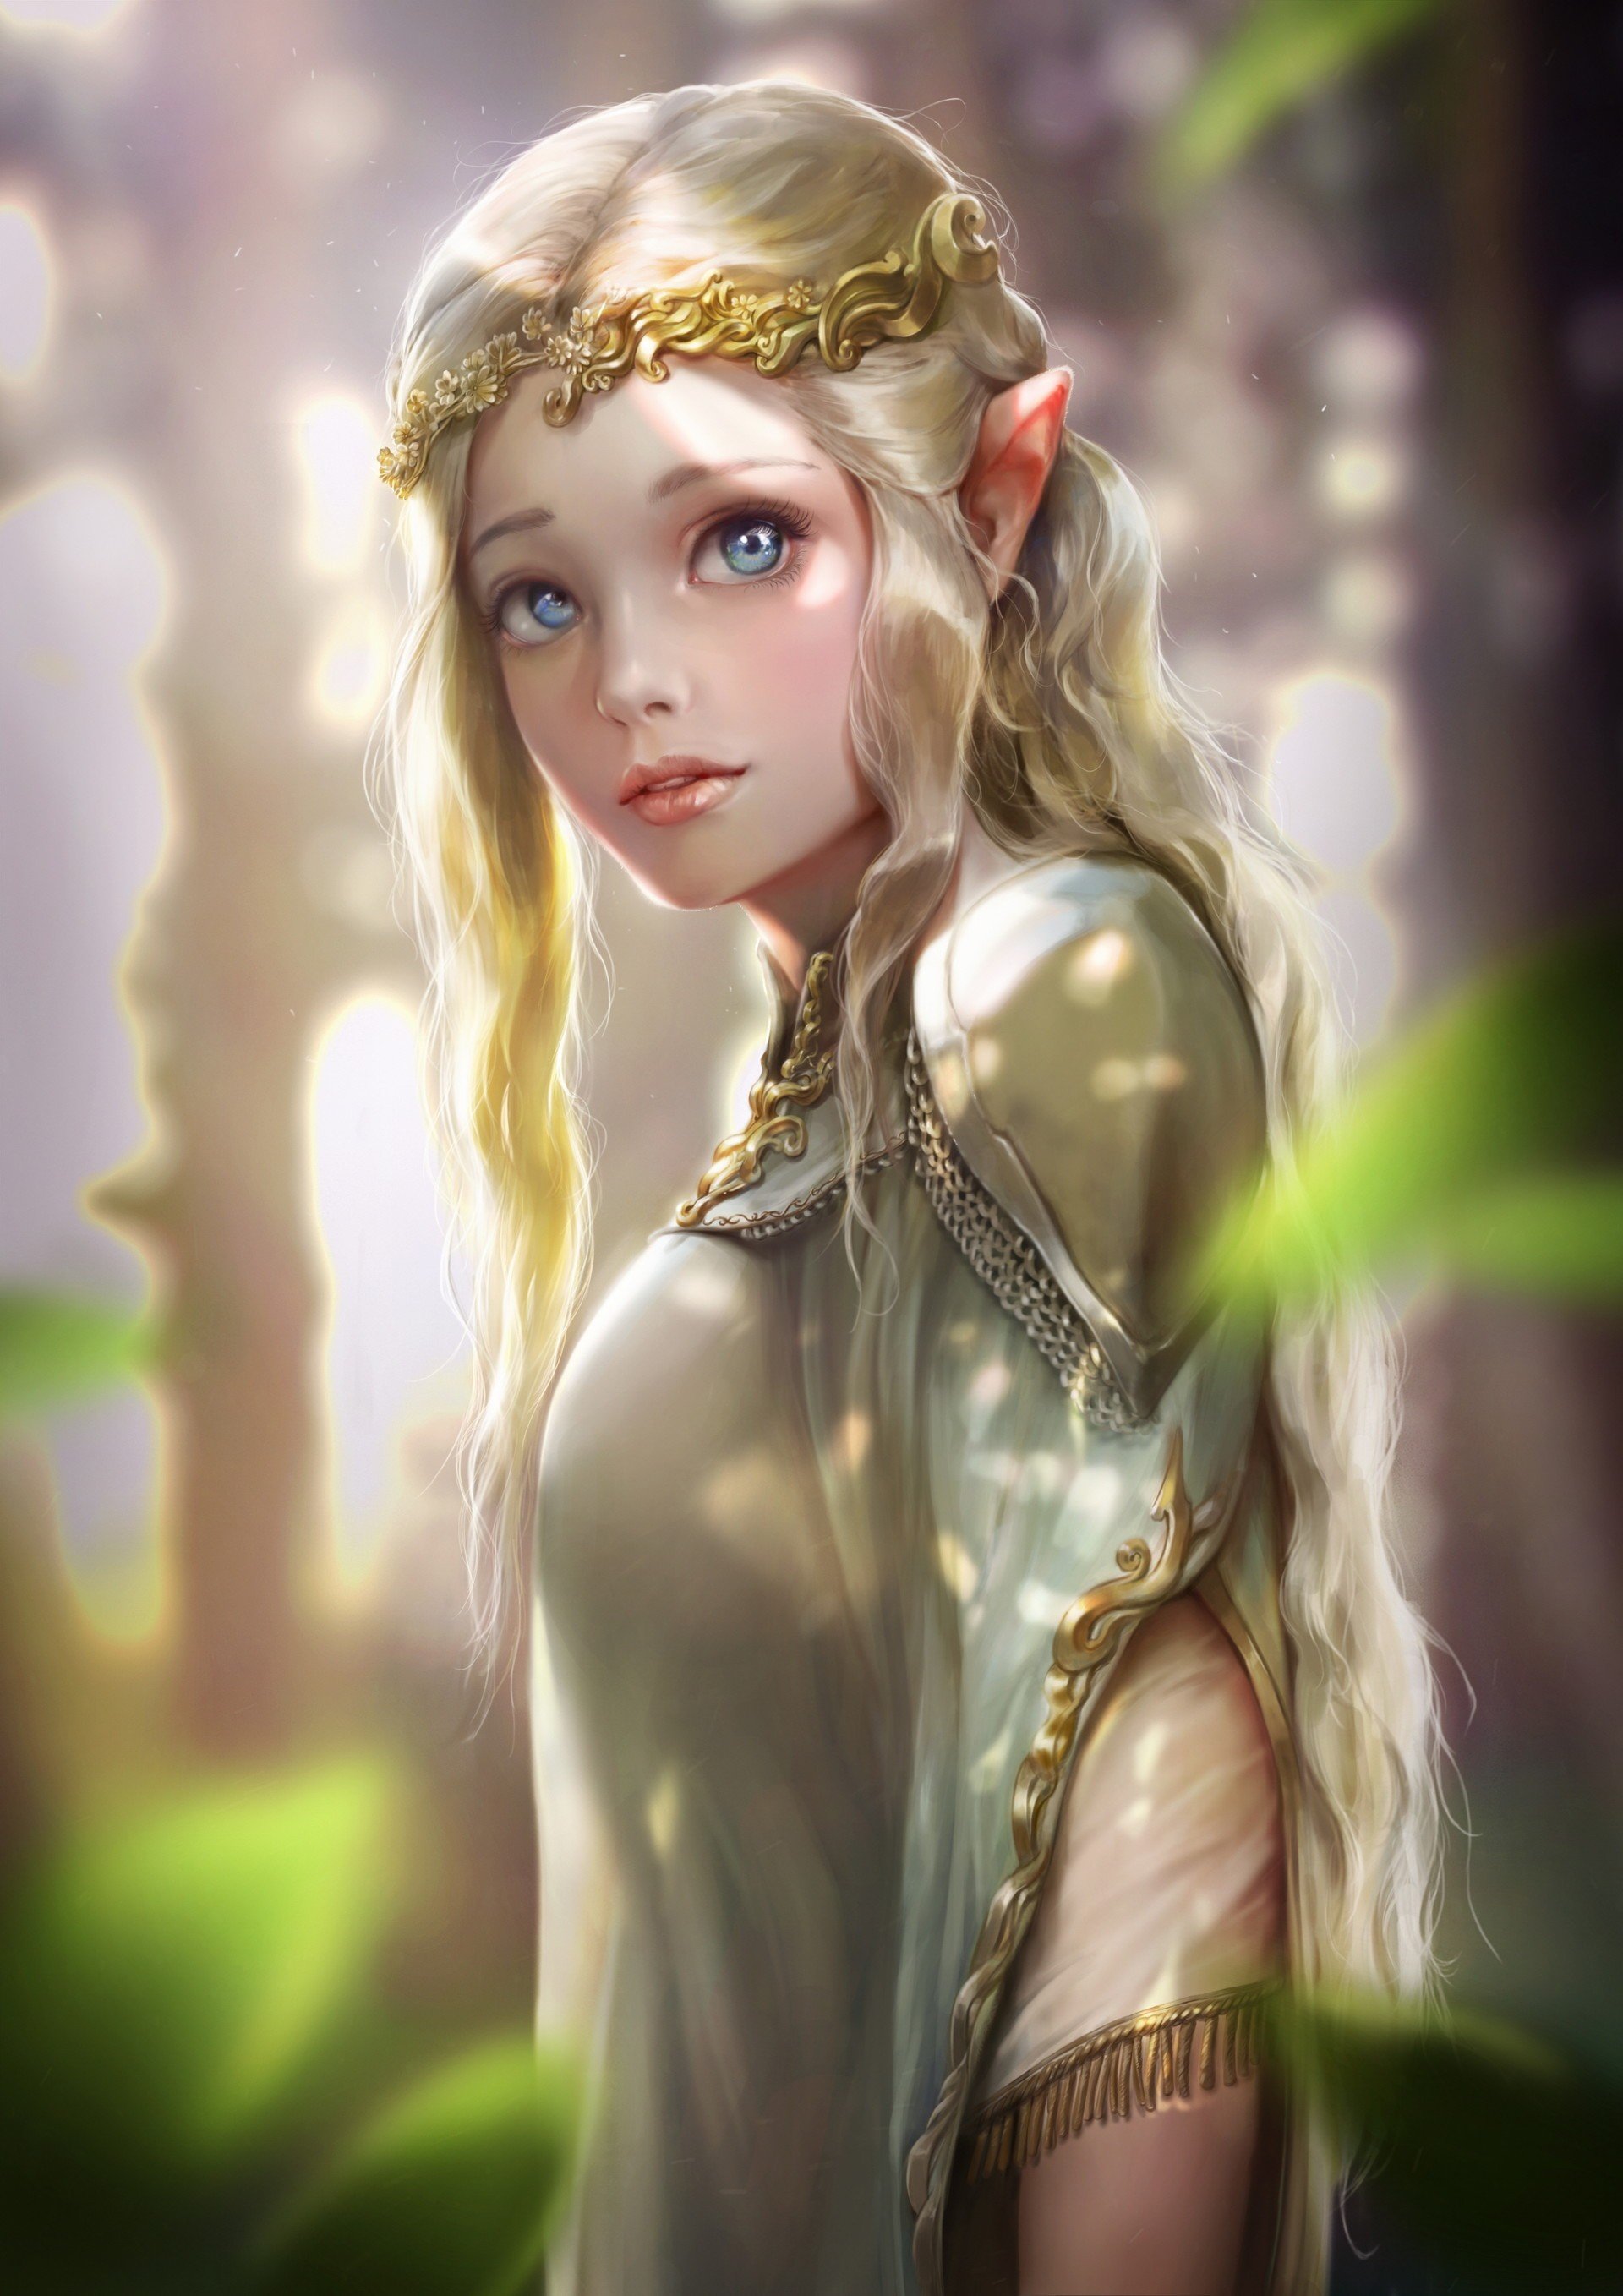 https://wallup.net/wp-content/uploads/2017/11/23/505524-elves-women-crown-fantasy_art.jpg